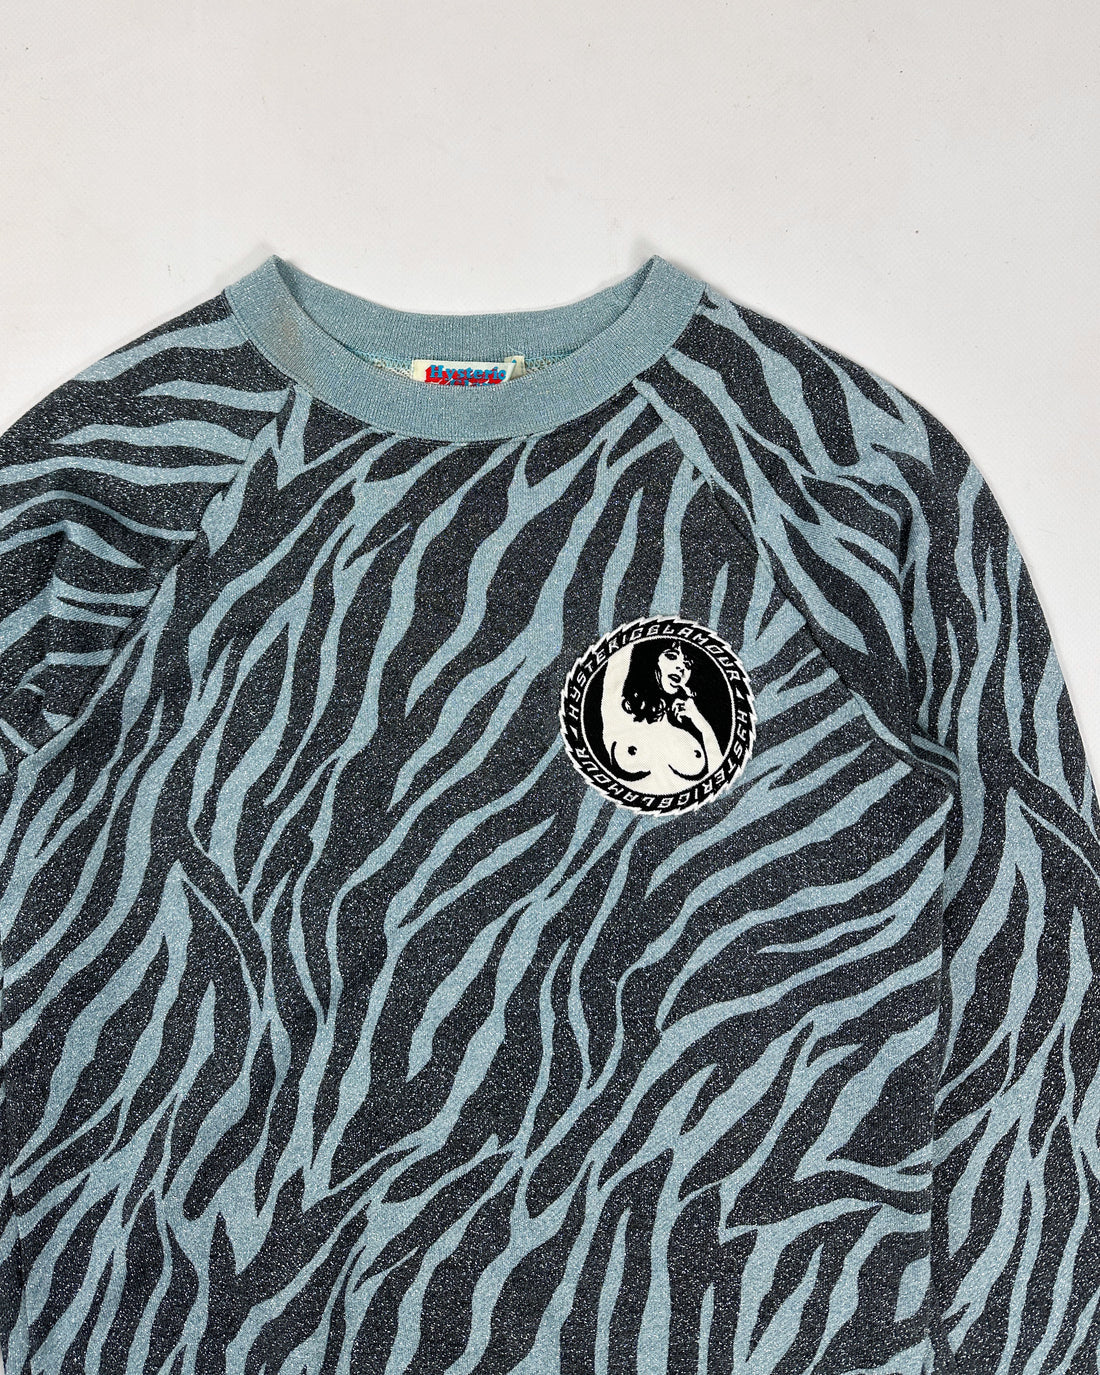 Hysteric Glamour Shiny Blue Zebra Sweatshirt 2000's